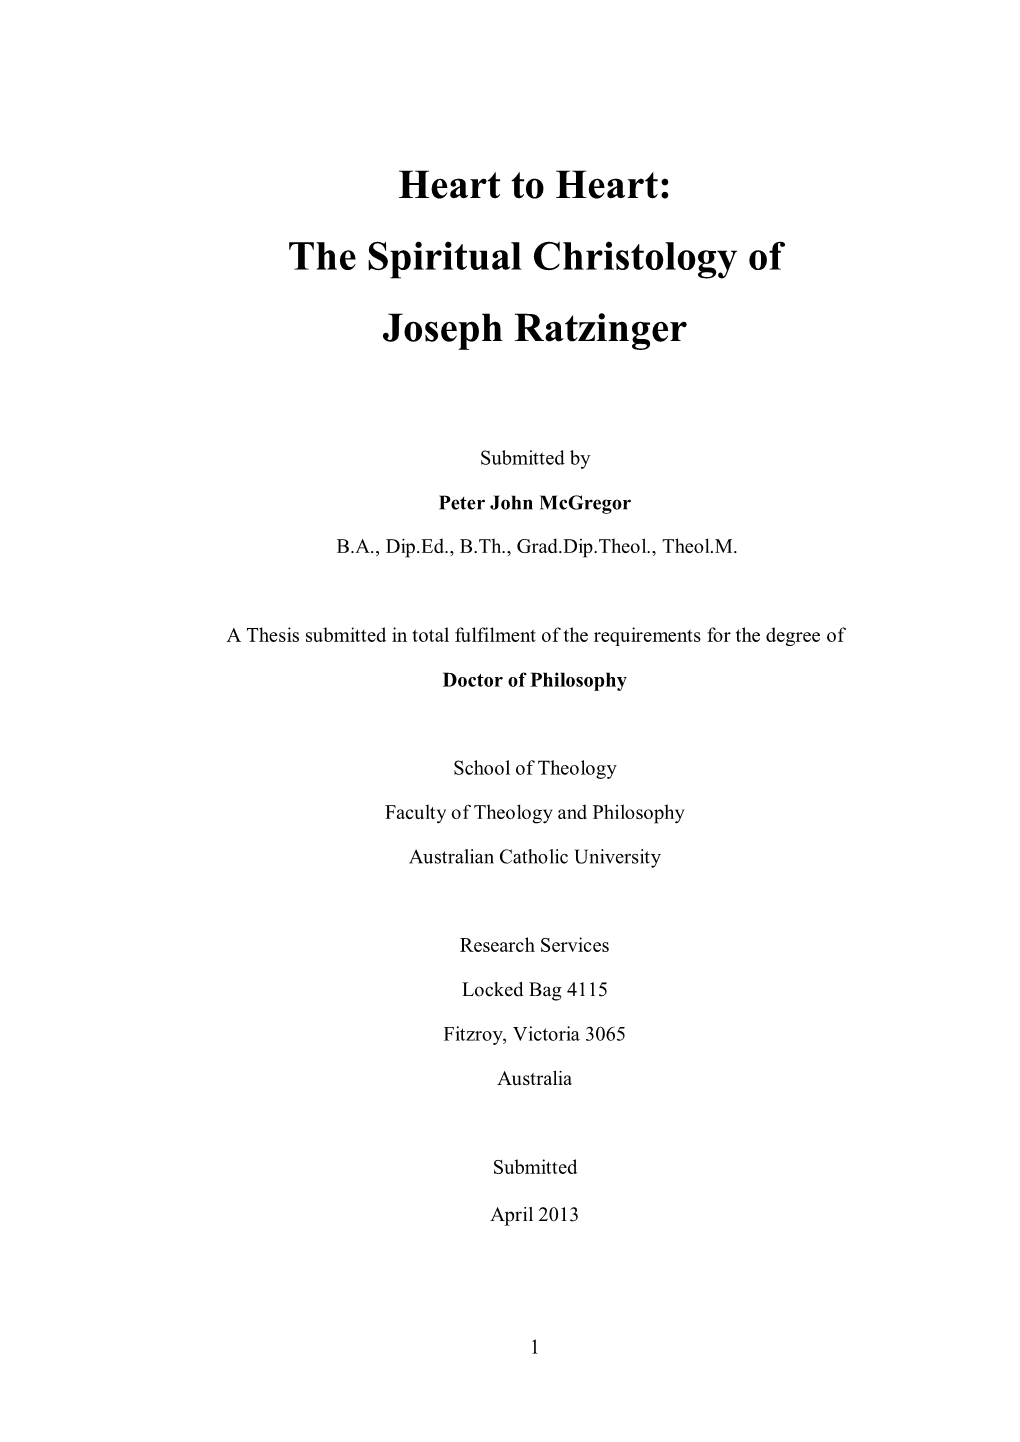 The Spiritual Christology of Joseph Ratzinger